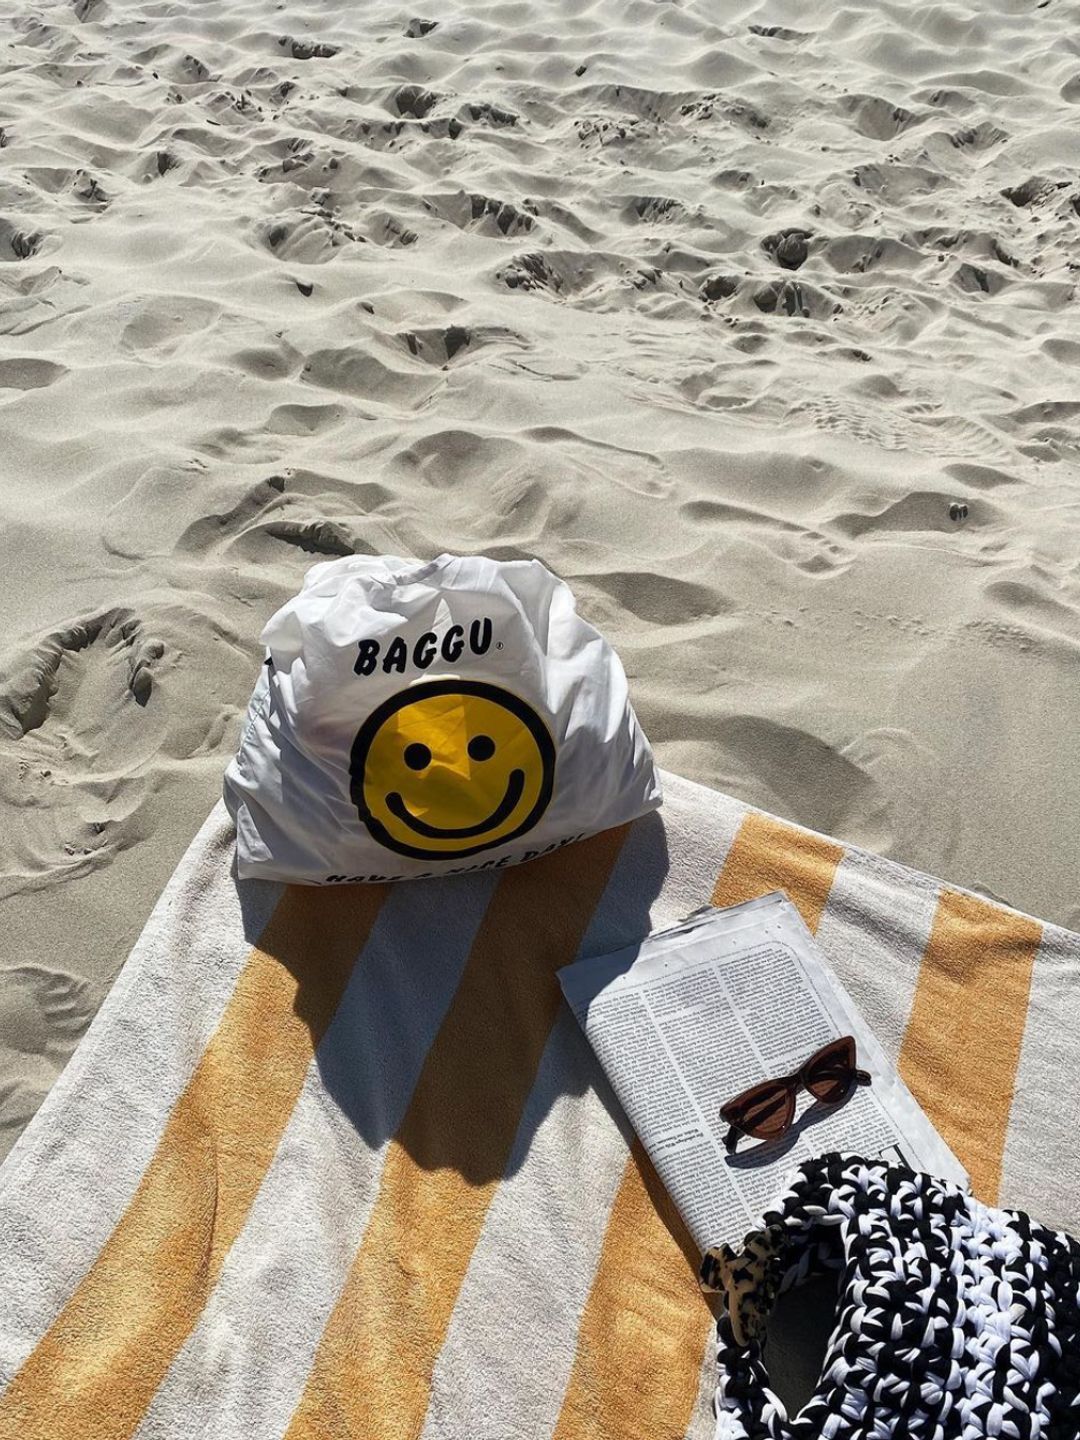 Influencer @julien_xo shares a beachside image of a book, towel and Baggu bag